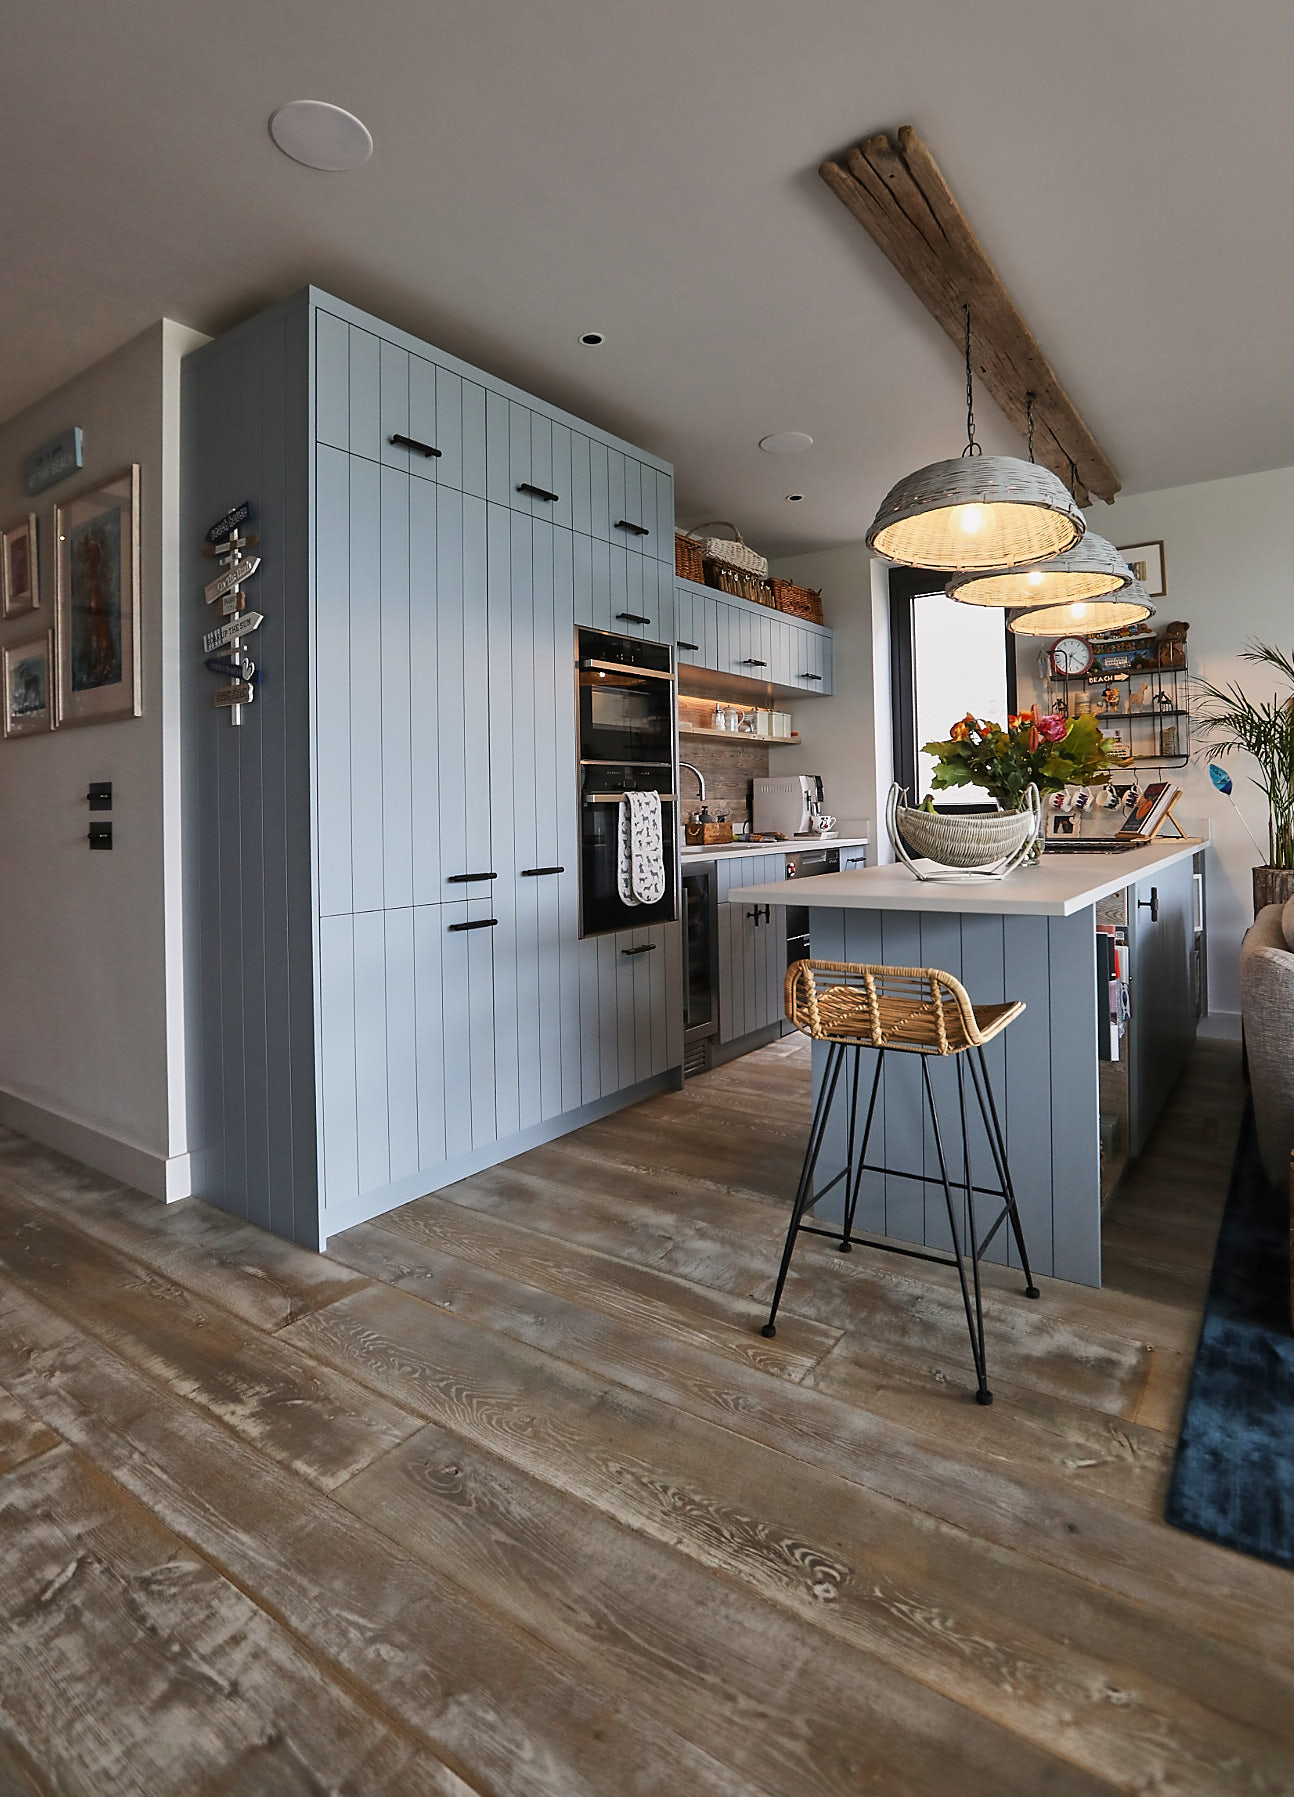 Baby blue bespoke kitchen with wooden flooring